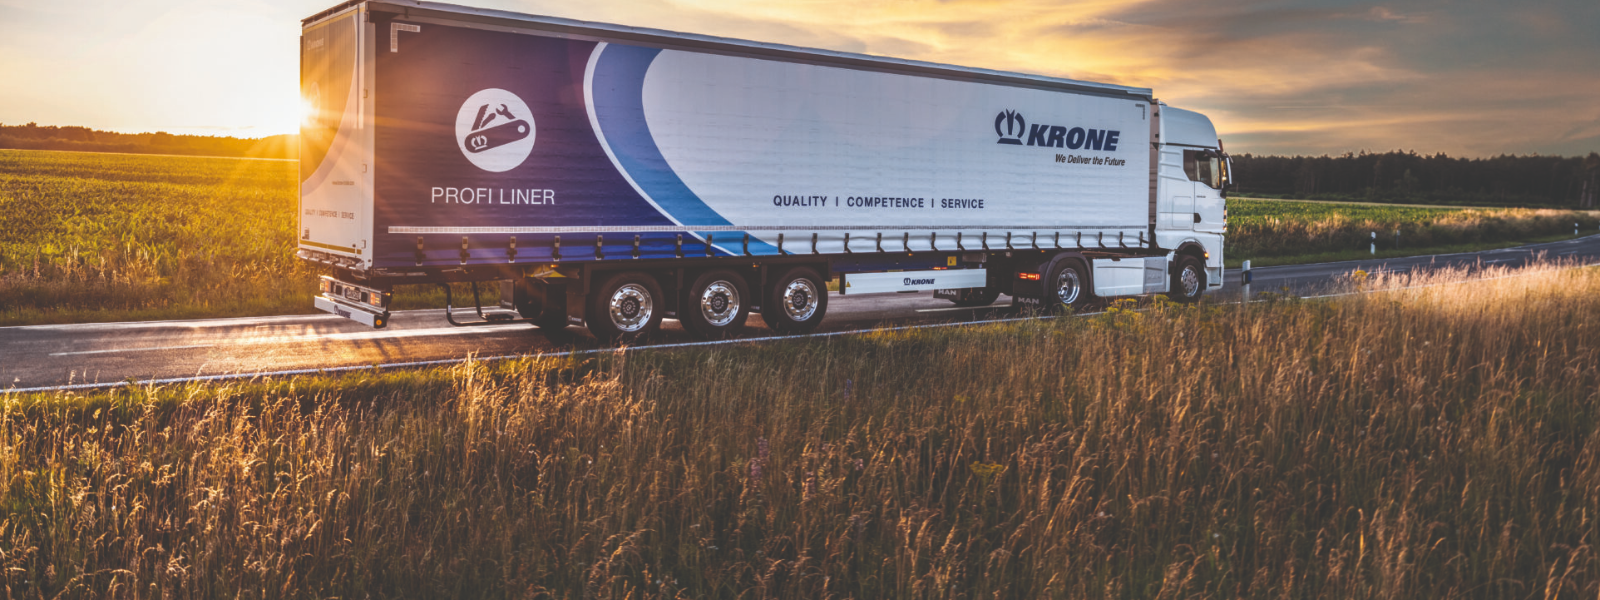 KRONE SCANBALT OÜ - Krone Scanbalt OÜ is the official representative and importer of Krone semi-trailers in Estonia sinc...